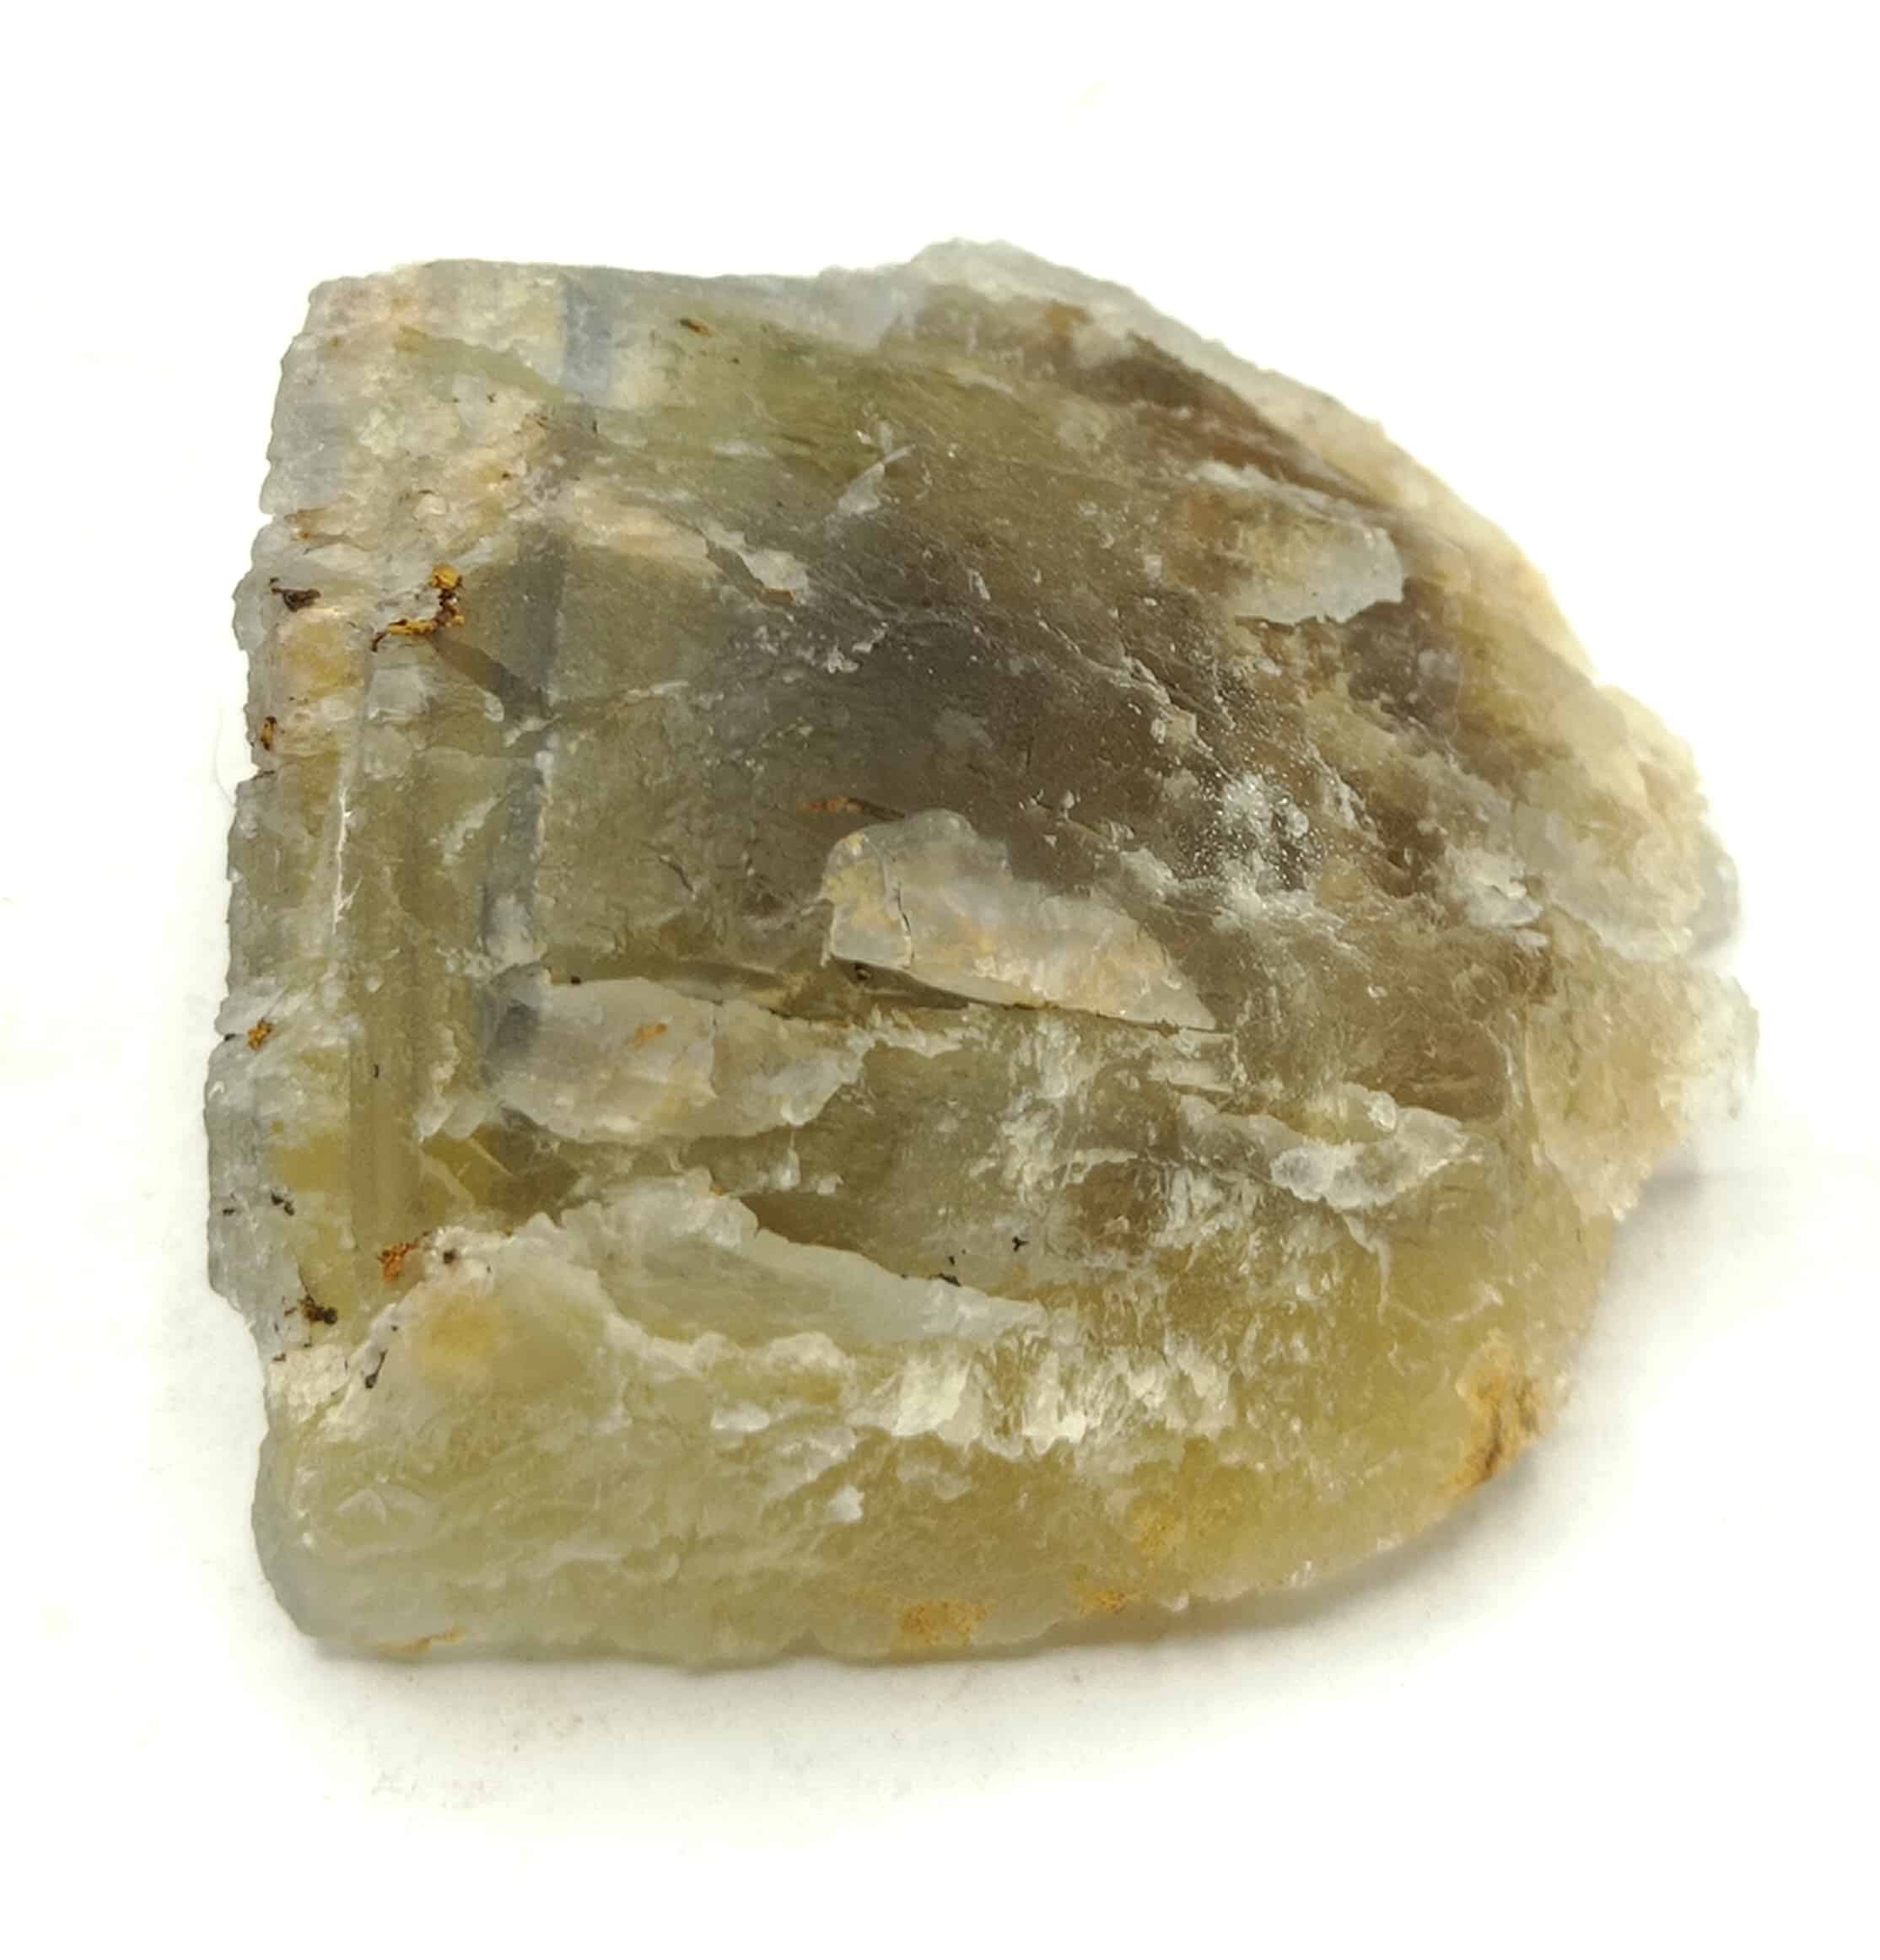 Fluorine corrodée (Fluorite), Gorges de Loulas (L’Oulas), Tarn.